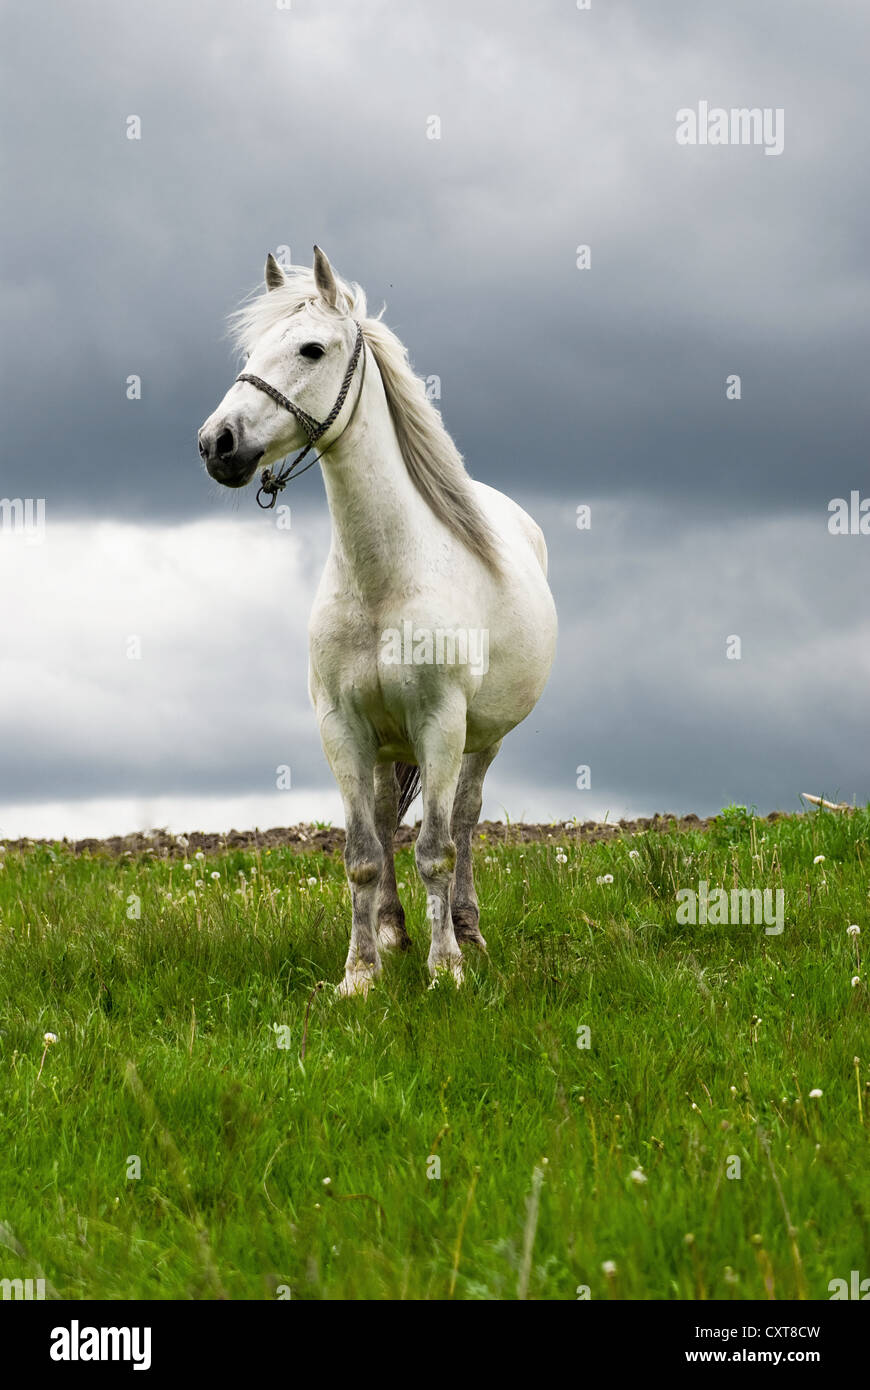 Free horse Stock Photo